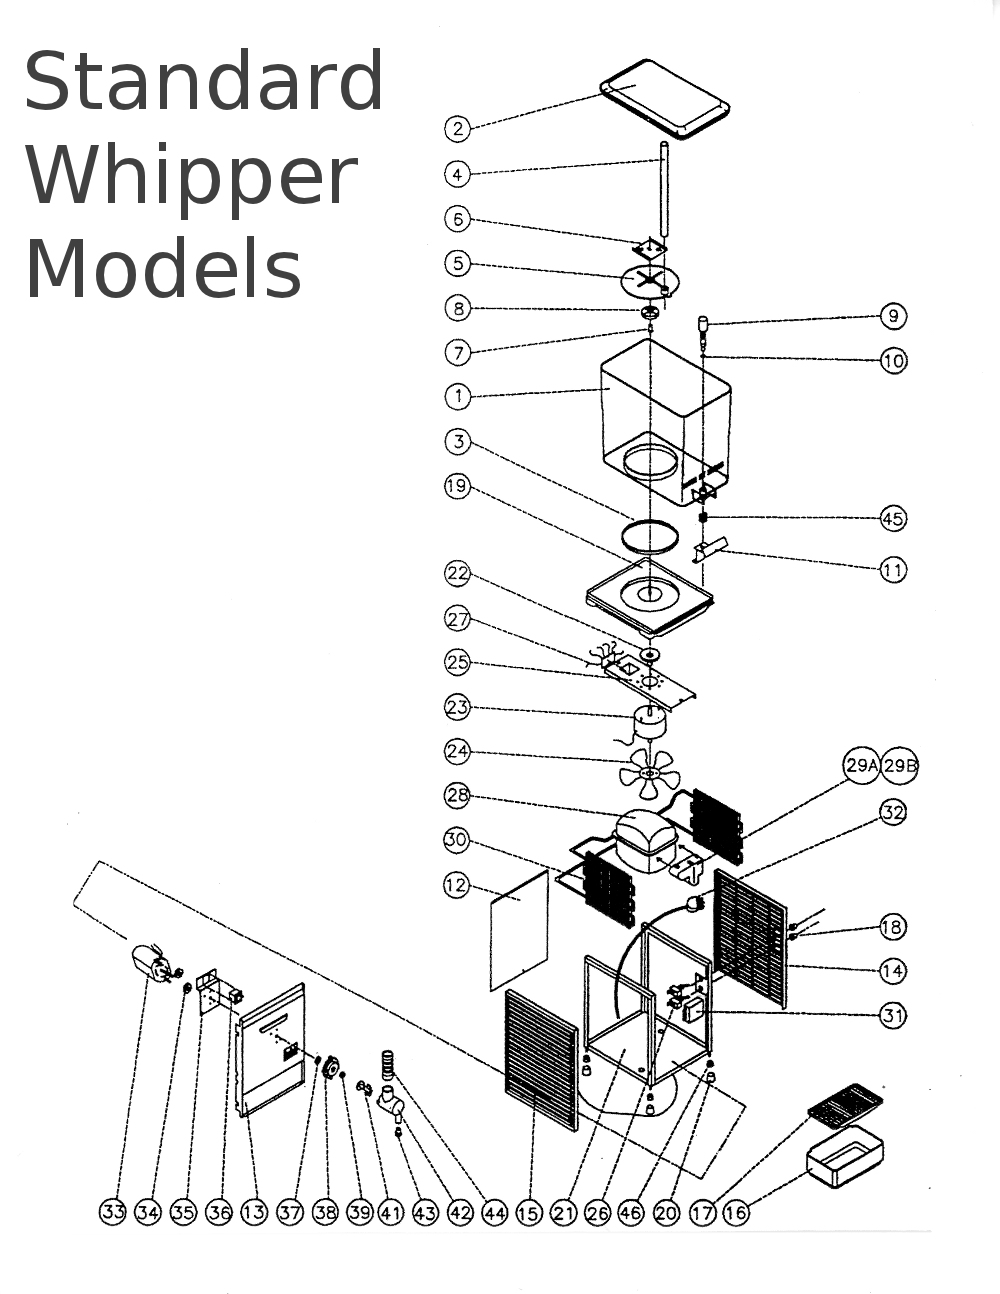 Exploded View Standard Whipper Models